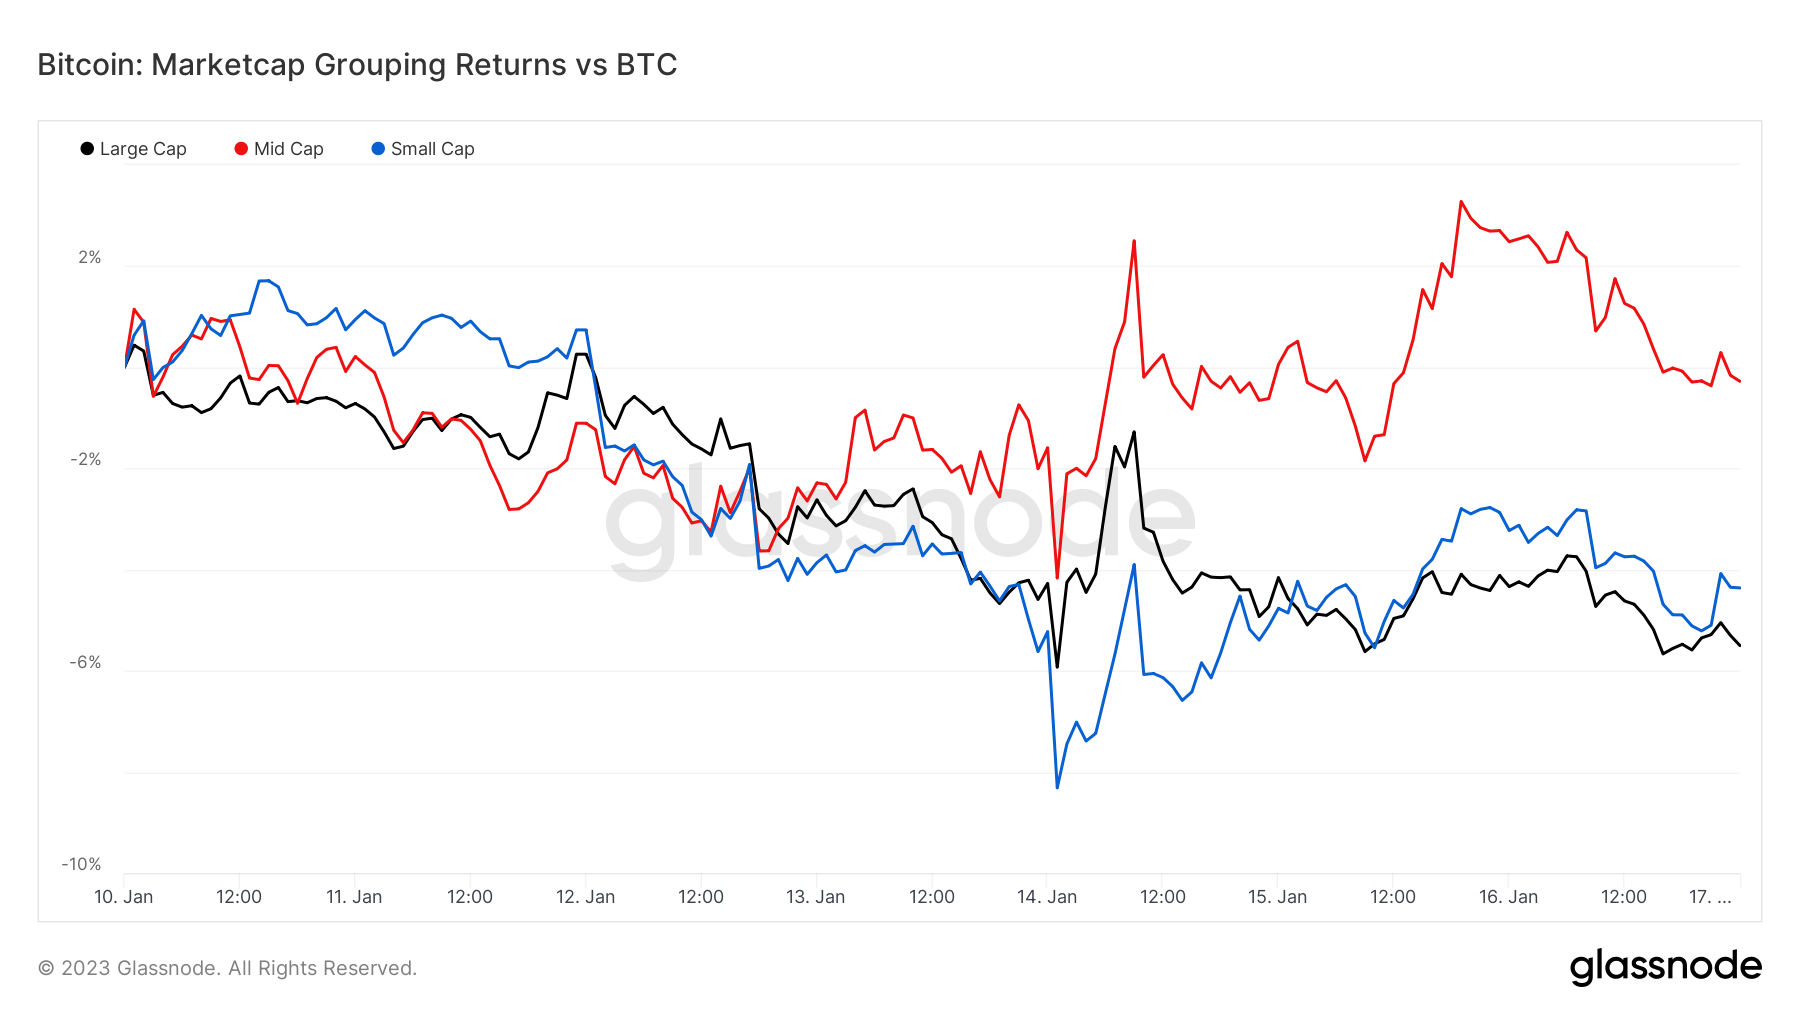 Marketcap grouping returns vs. BTC: (Source: Glassnode)